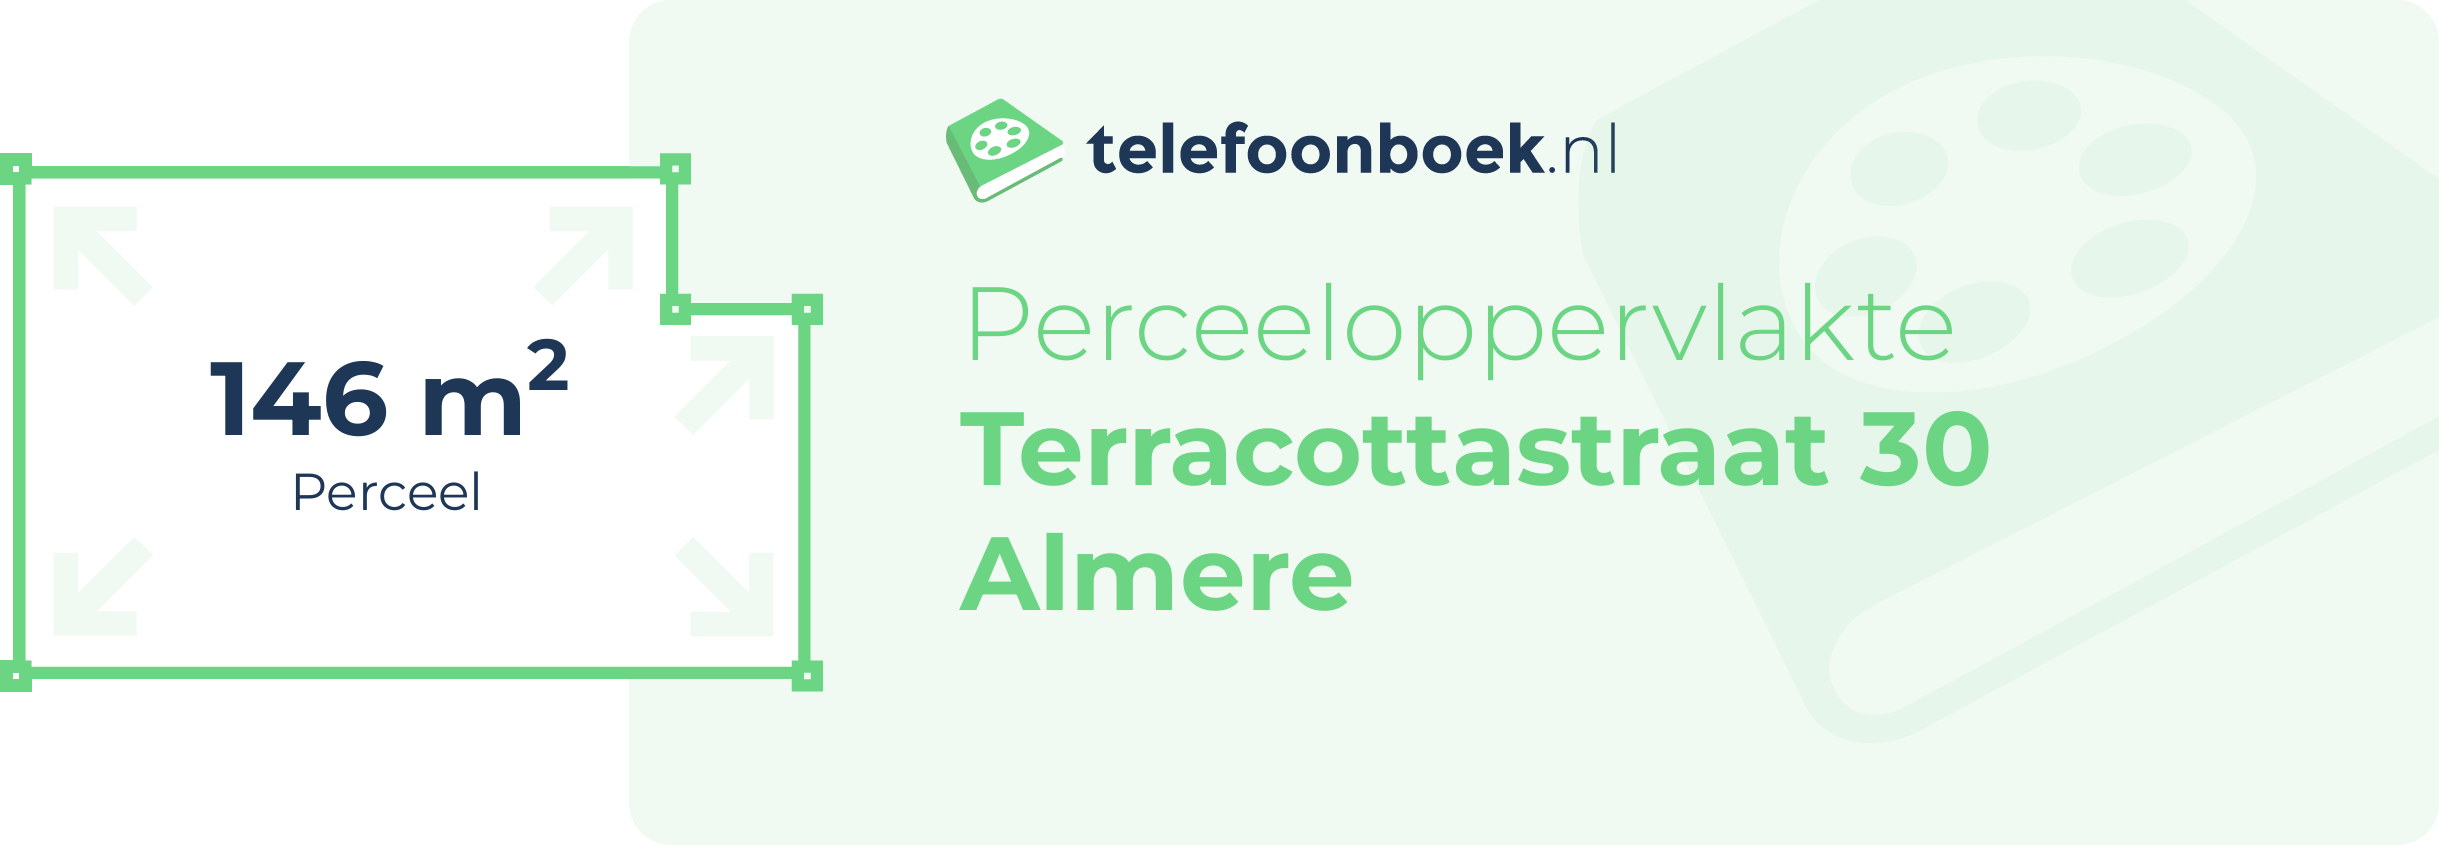 Perceeloppervlakte Terracottastraat 30 Almere